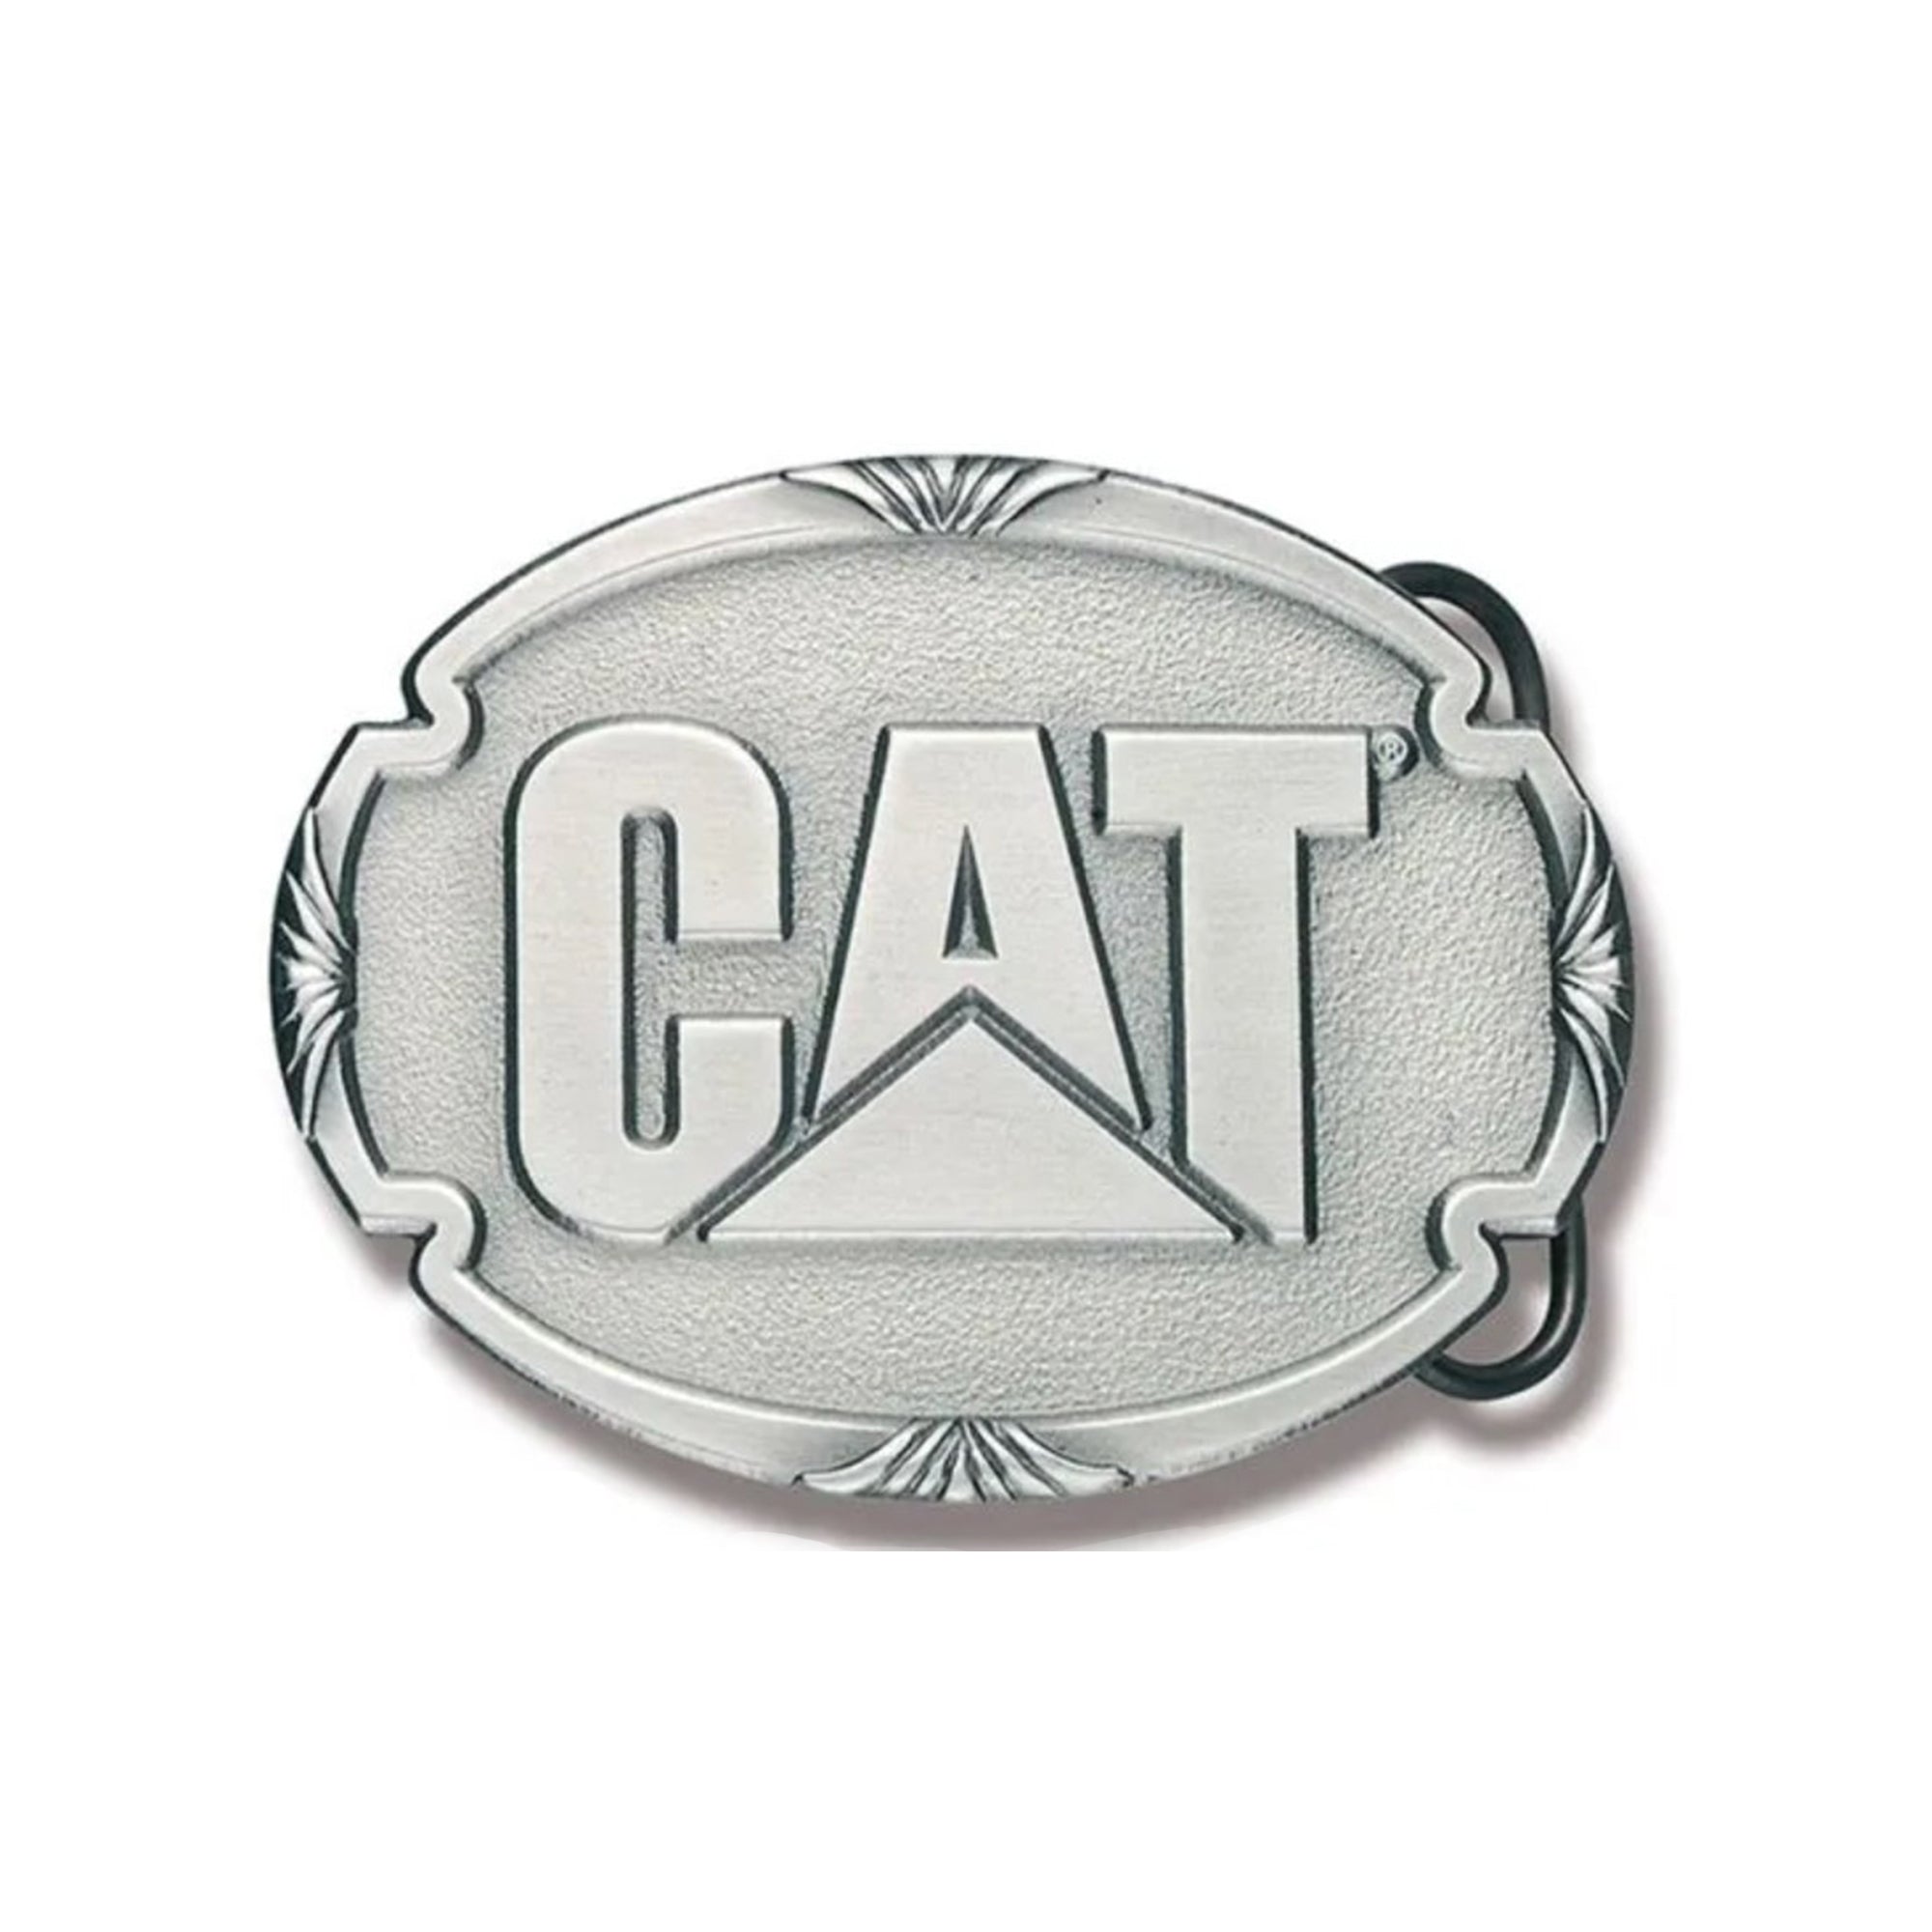 CAT - Design Mark Belt Buckle